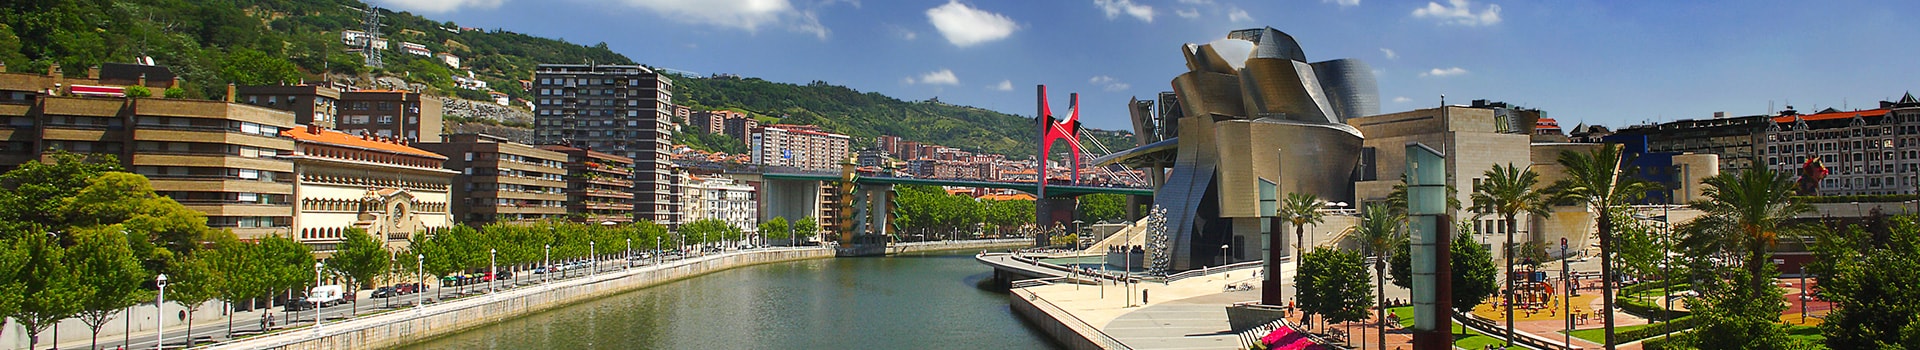 Majorca - Bilbao